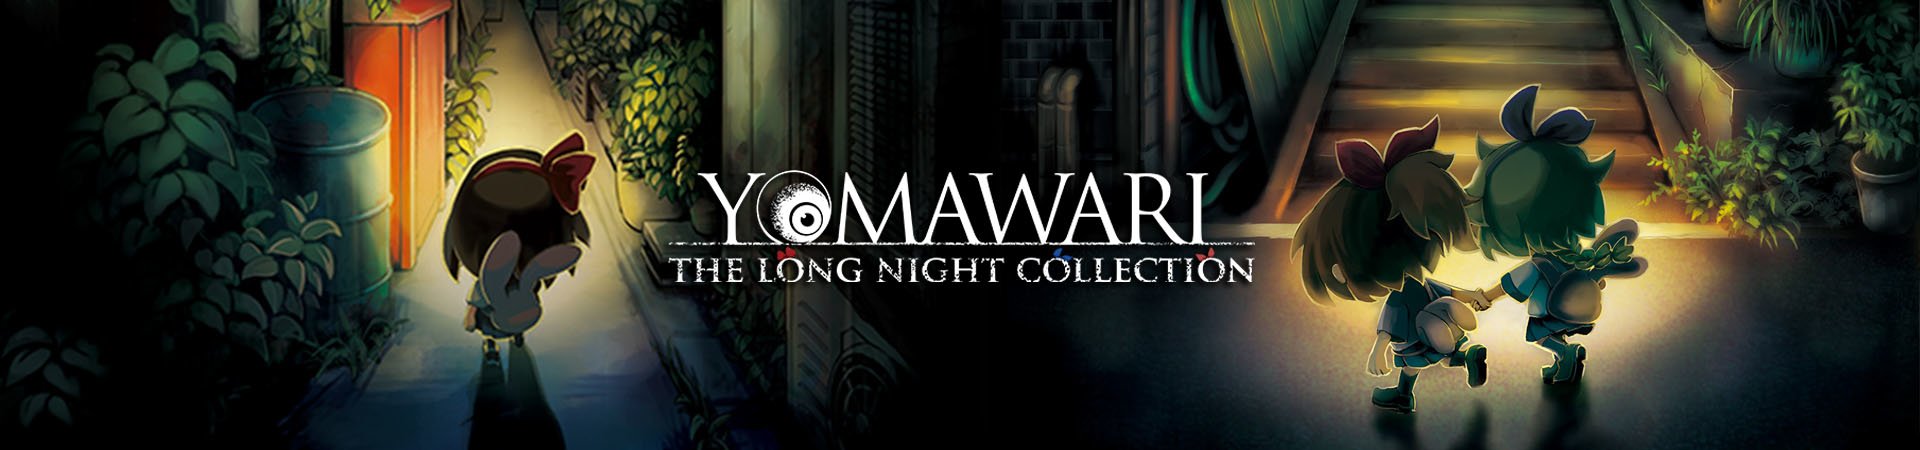 yomawari night alone review